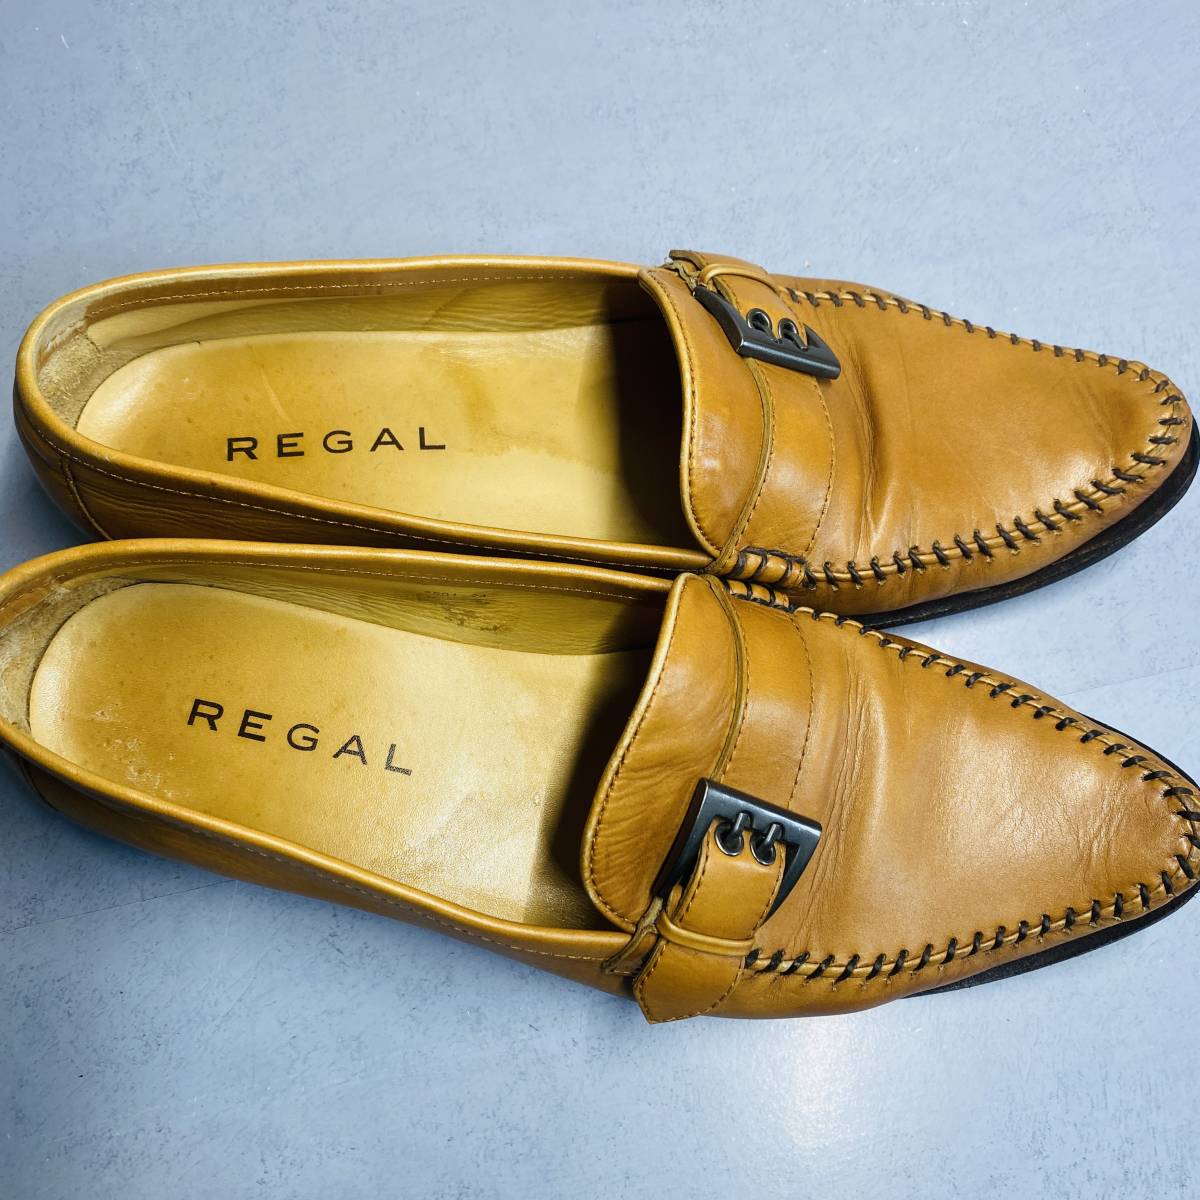 REGAL Reagal натуральная кожа Loafer 24cm Brown туфли-лодочки обувь 